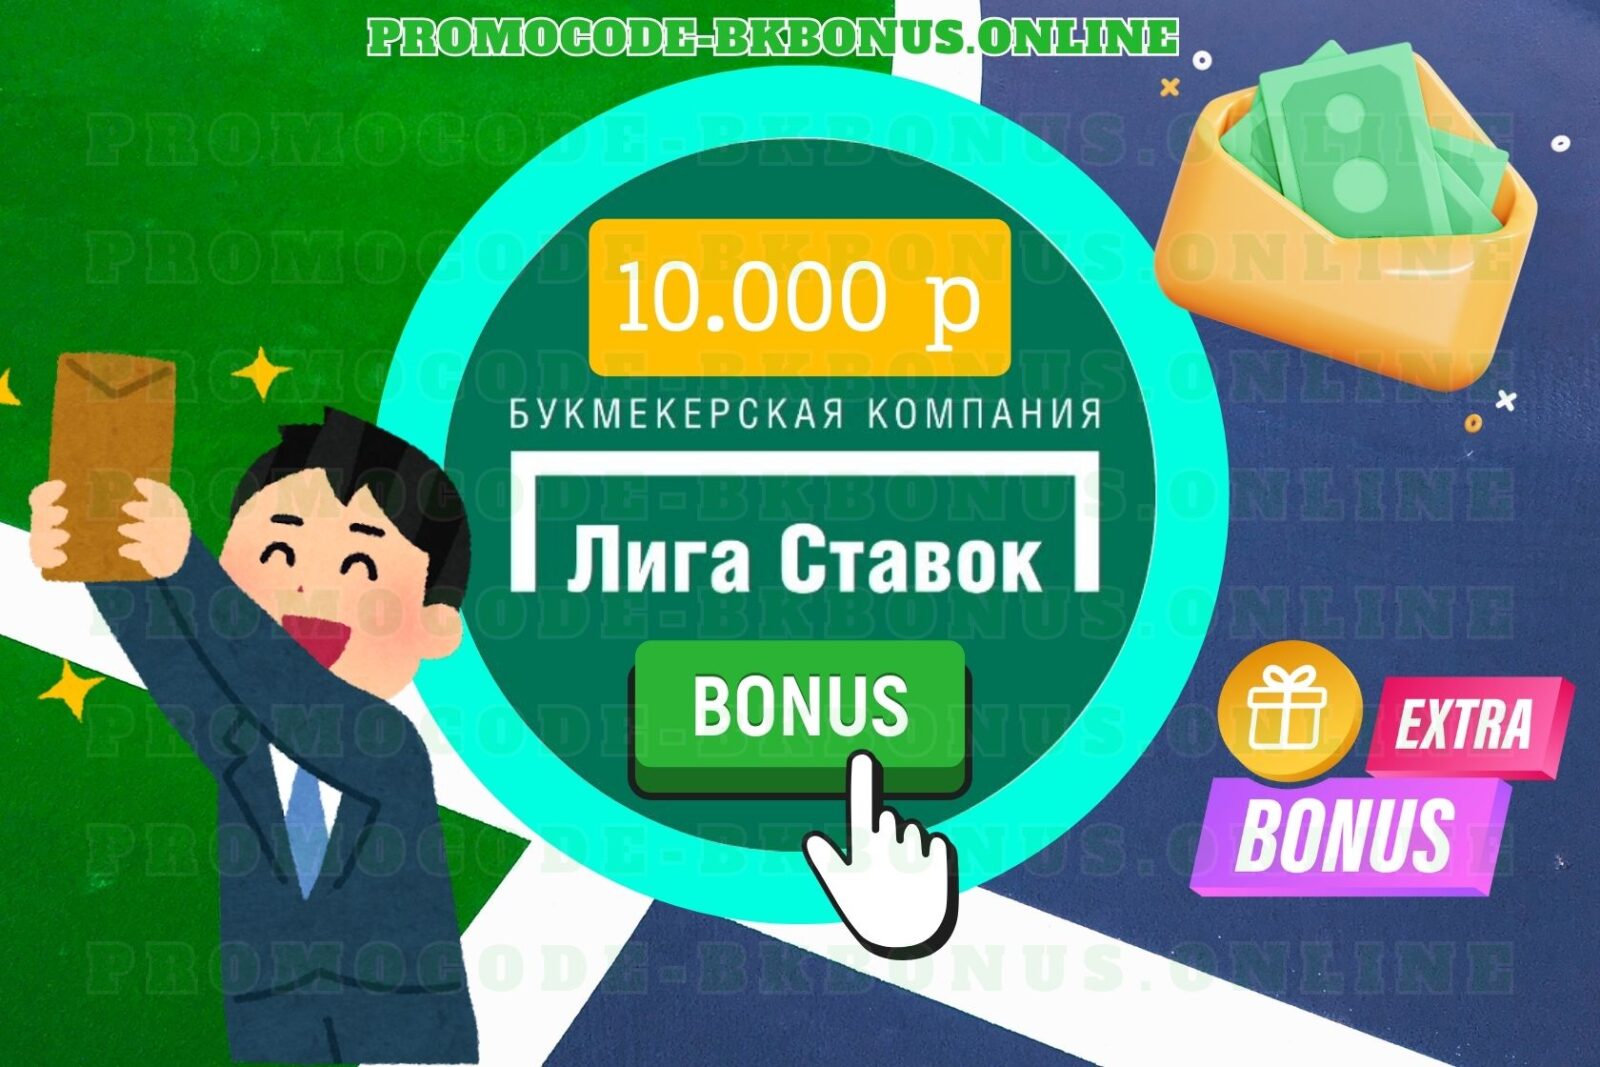 bonus-liga-stavok-10-000-rublej-promokod-fribet-bonus-bukmekerskaya-kontora-stavki-na-sport-kopiya-87